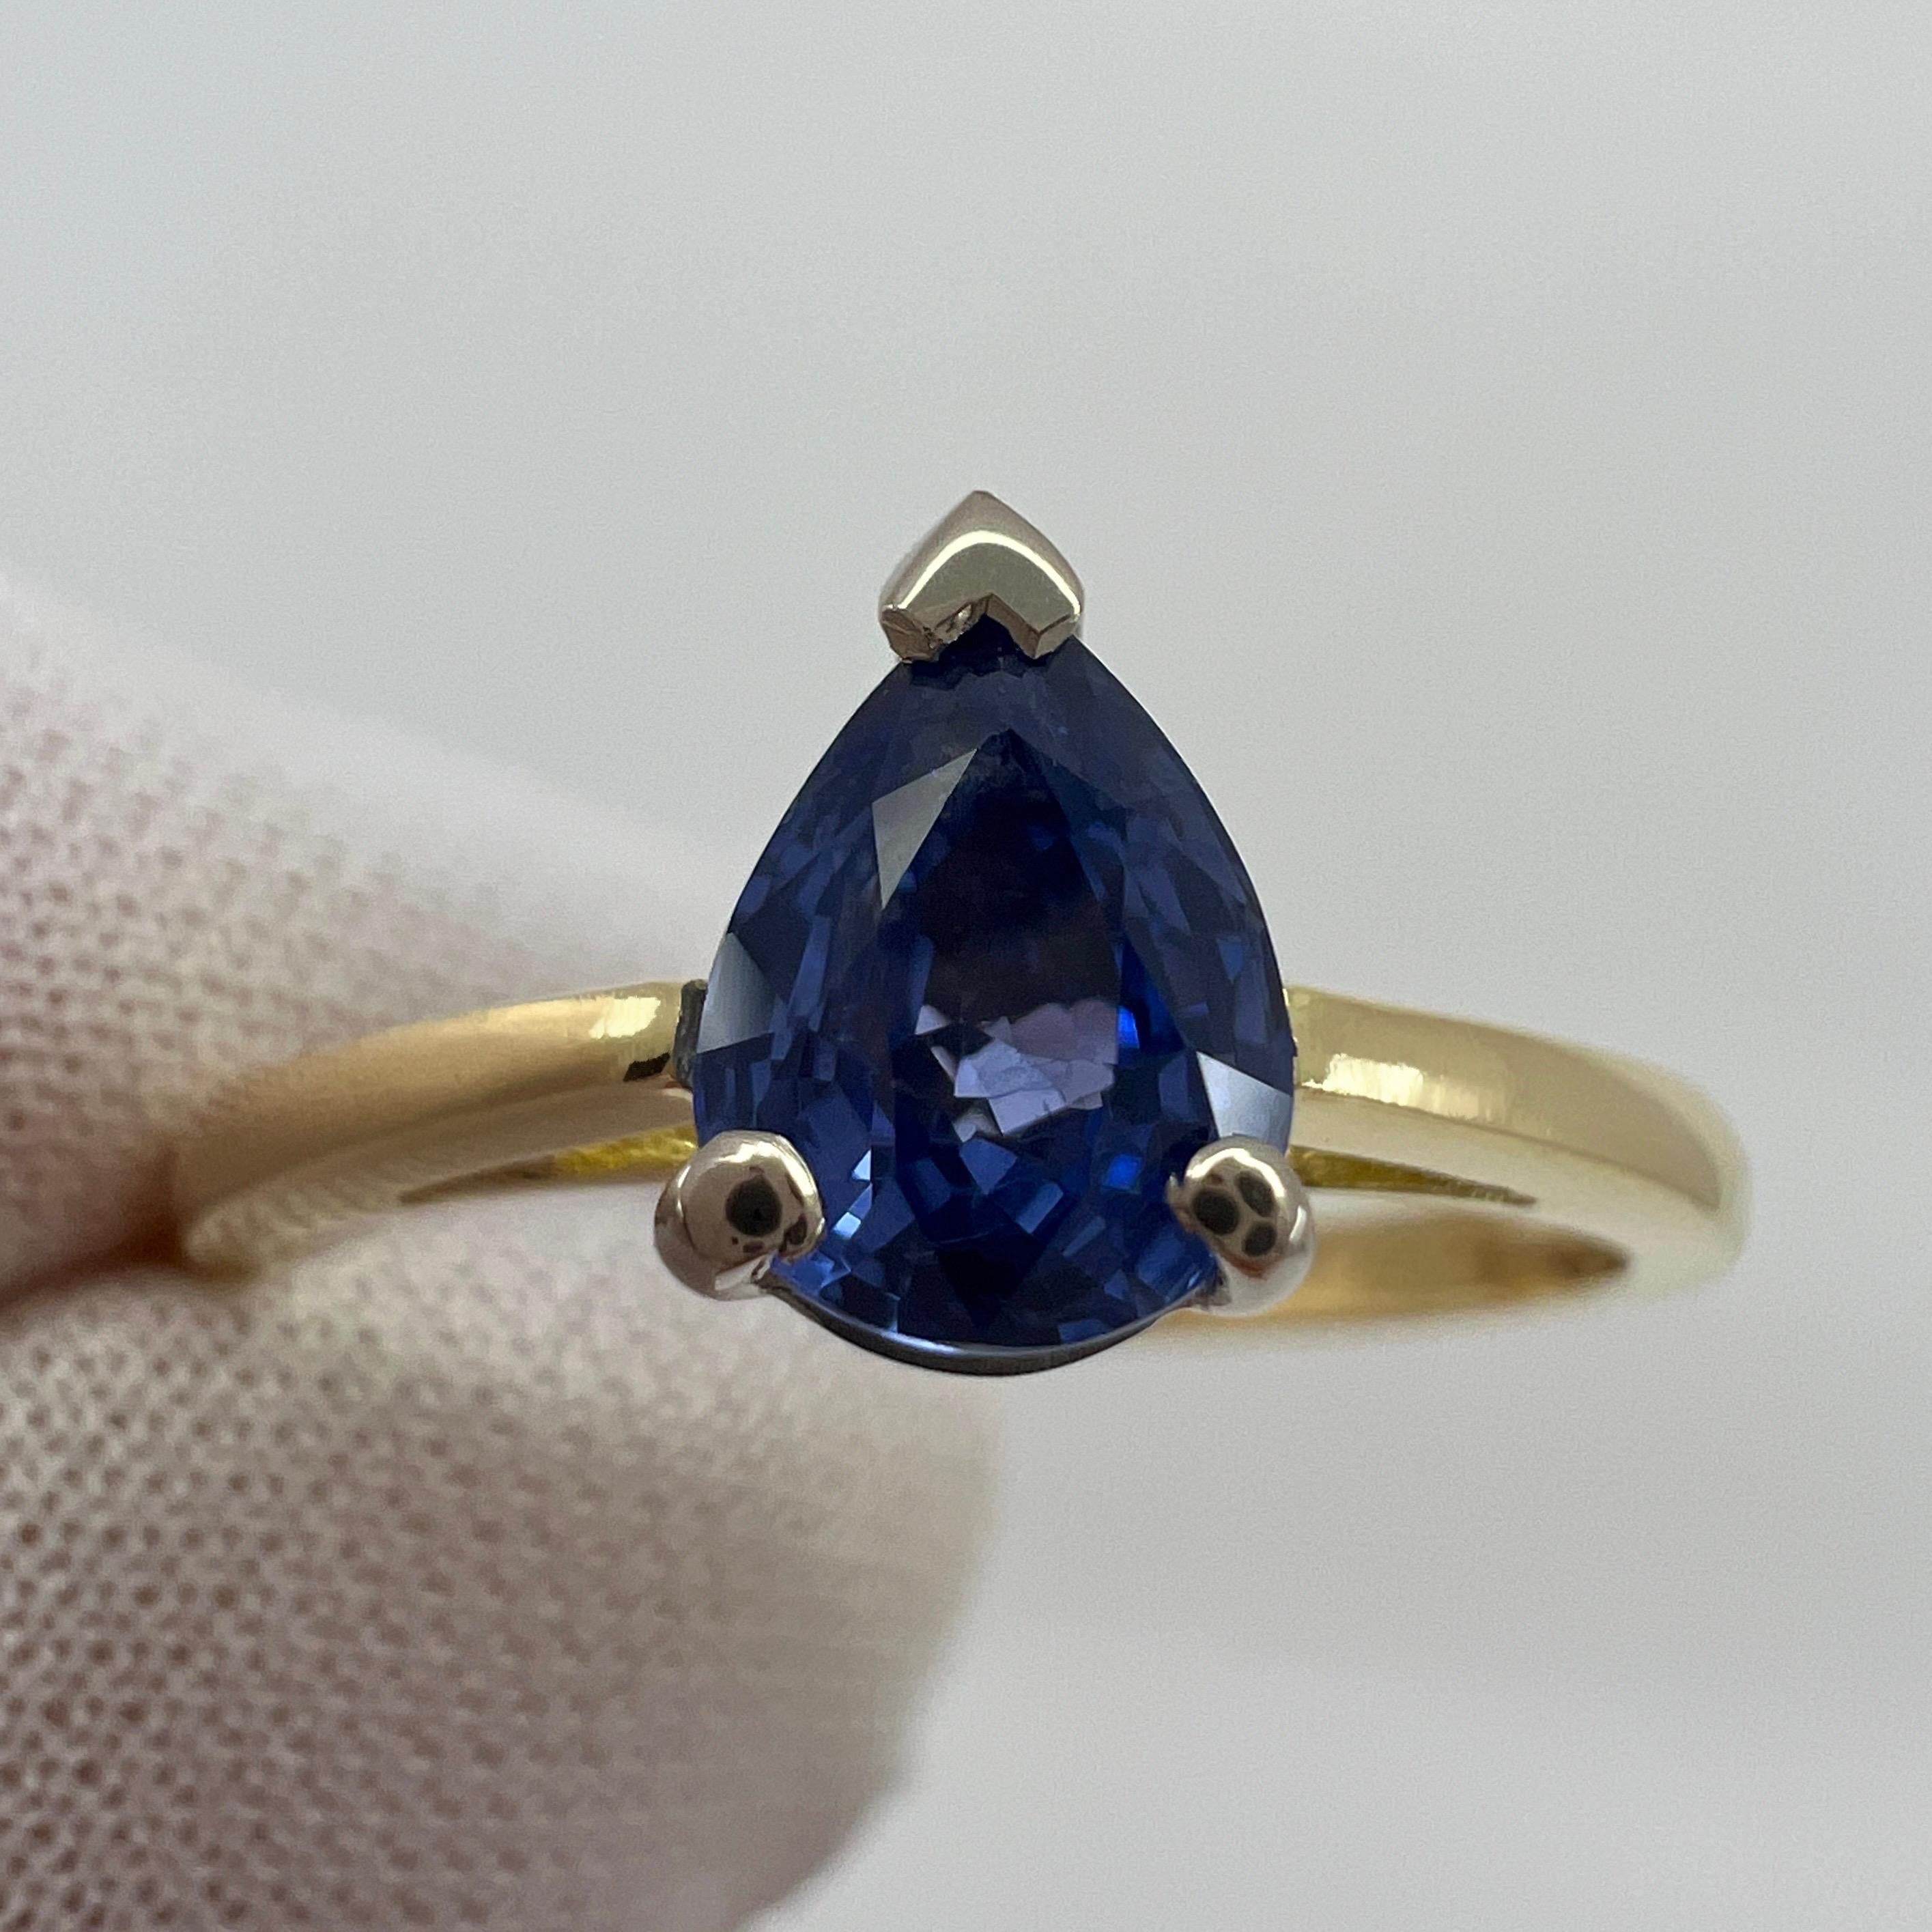 1.04ct Vivid Blue Ceylon Sapphire Pear Teardrop Cut 18k Gold Solitaire Ring For Sale 1